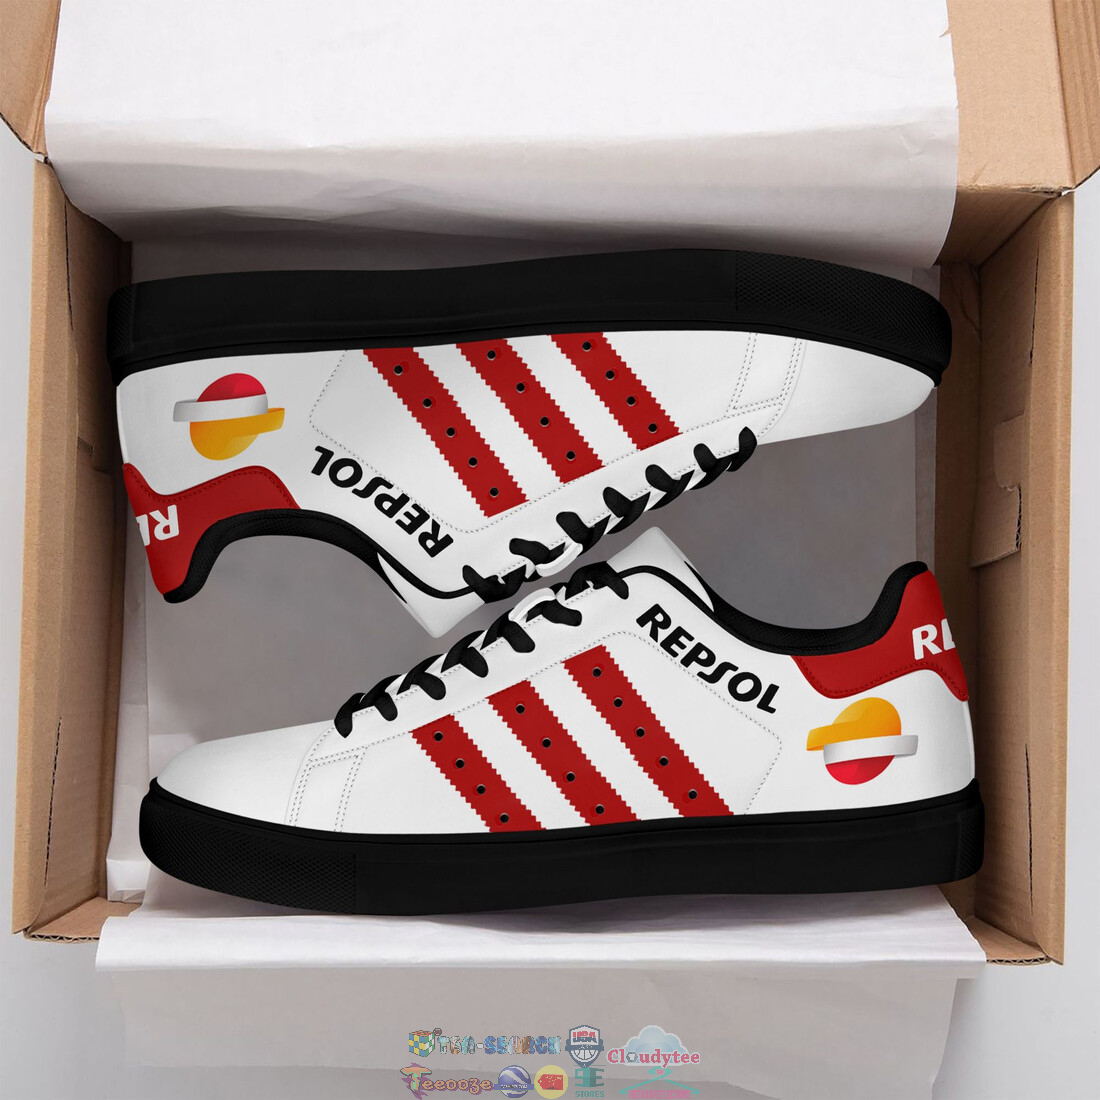 uOHkALkw-TH270822-42xxxRepsol-Honda-Red-Stripes-Stan-Smith-Low-Top-Shoes3.jpg